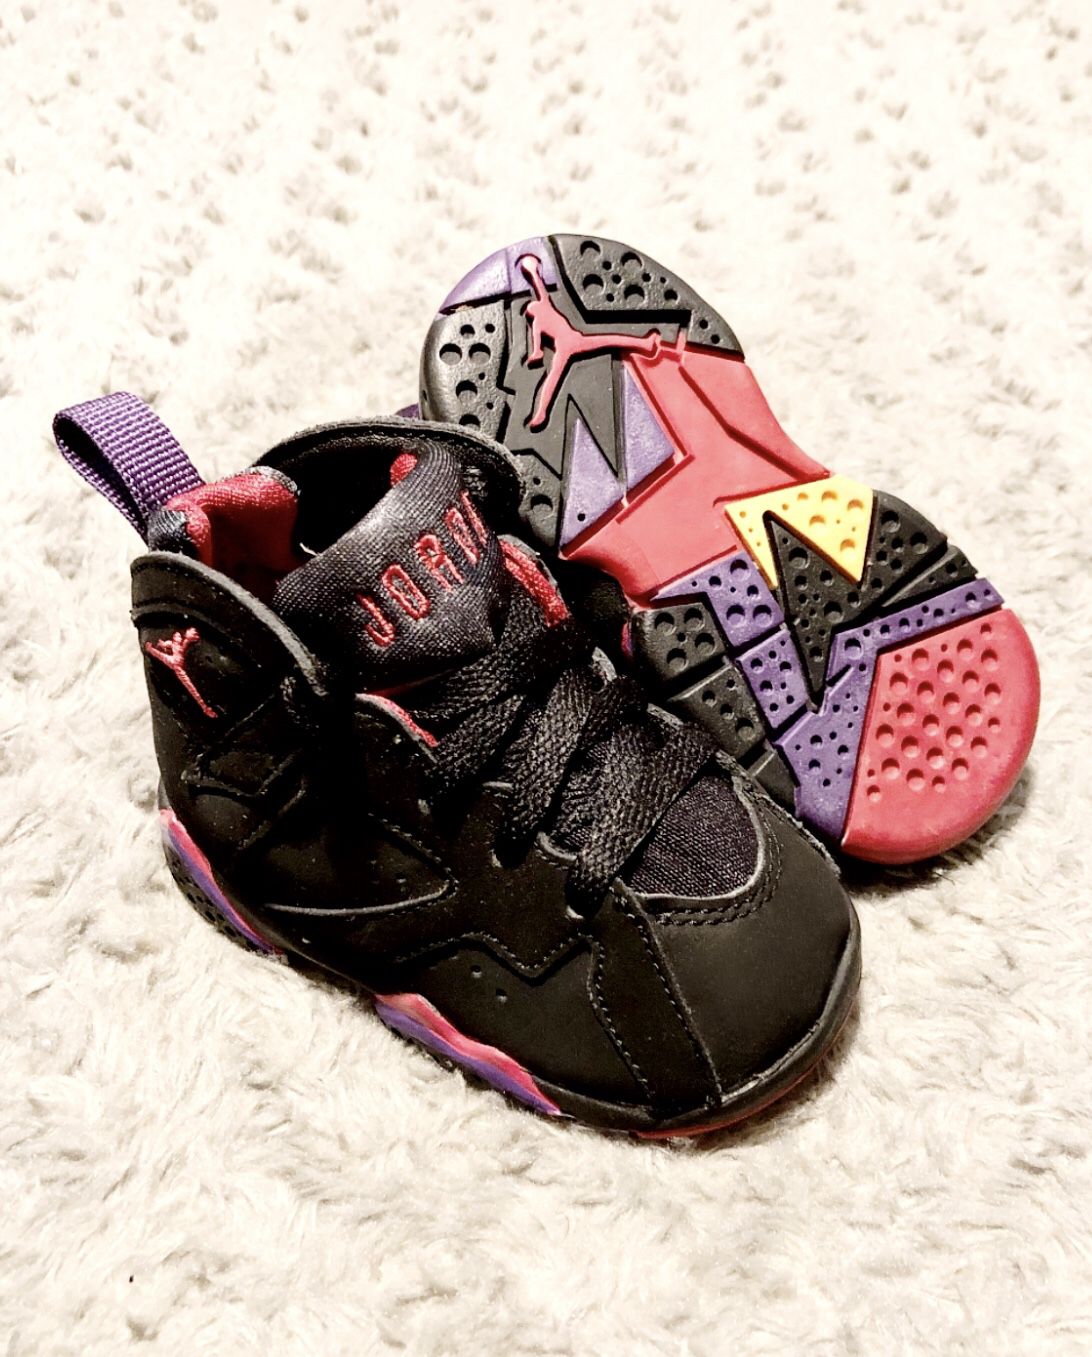 New! Baby Jordan 7 Retro shoes paid $56 size 4C style #304772 brand new never worn! Classic Black/True Red-Dark Charcoal-Club Purple